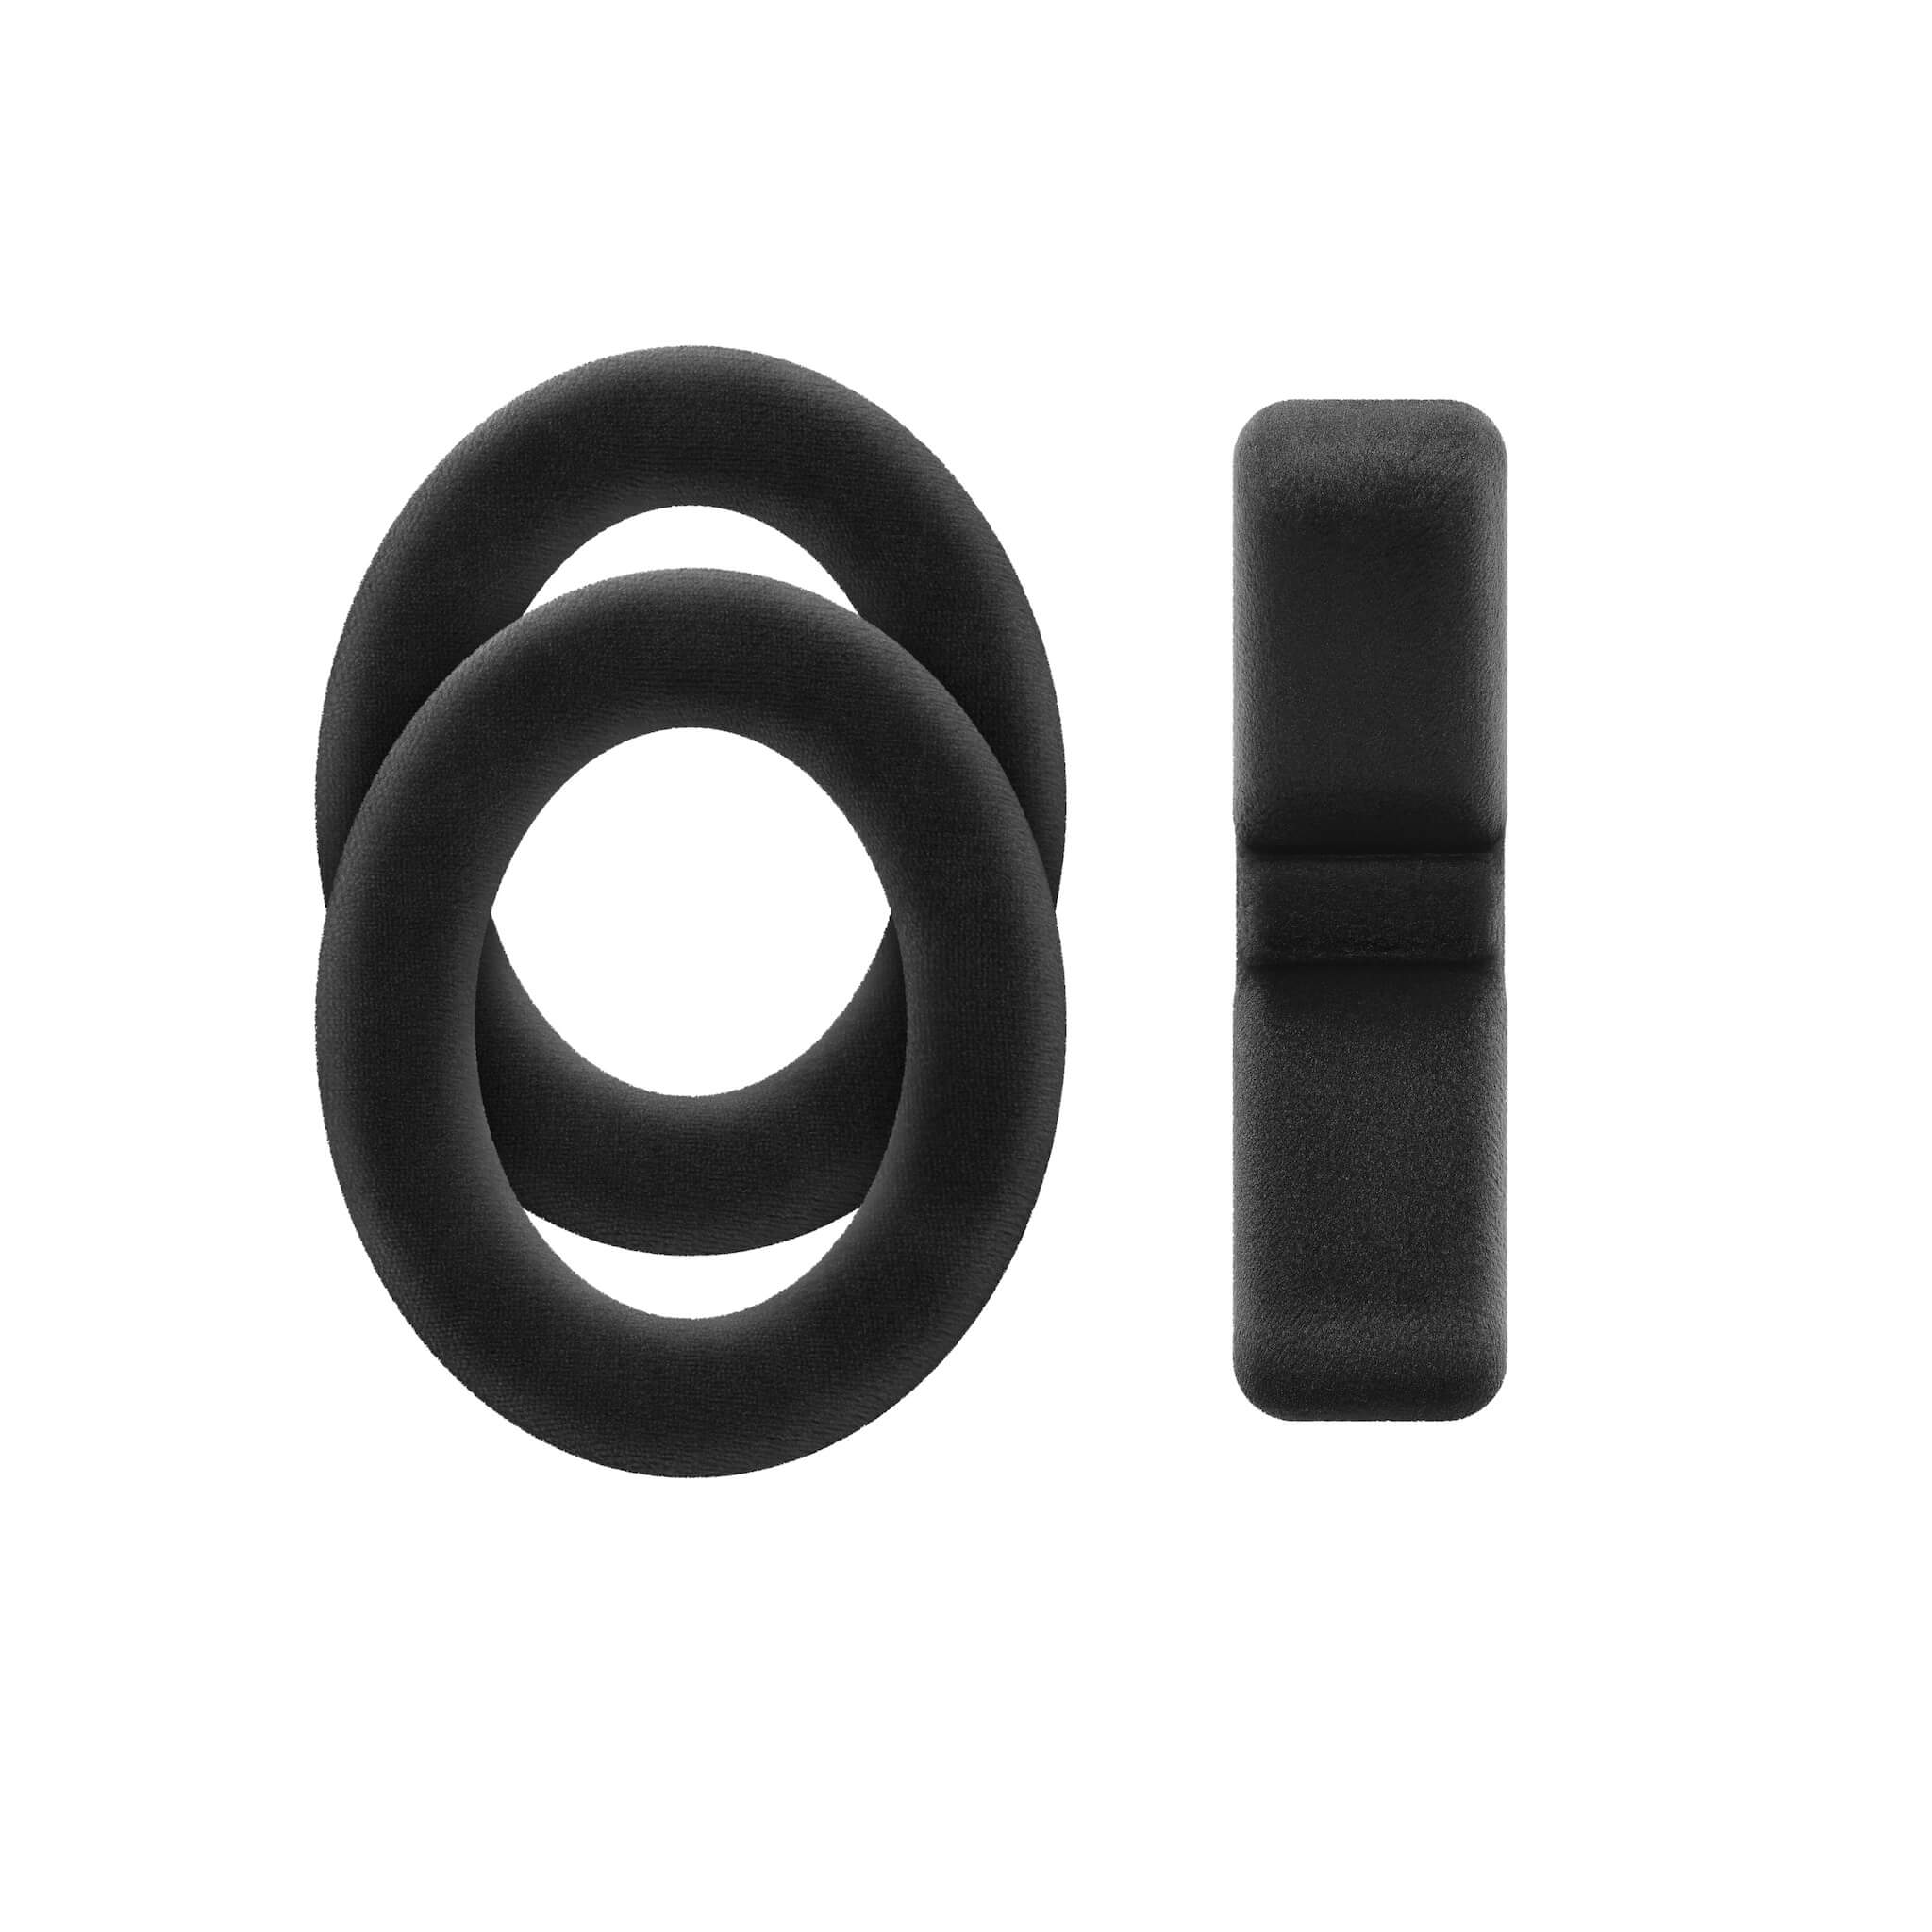 Sennheiser HD 490 PRO - Professional Studio Reference Headphones, producing pads